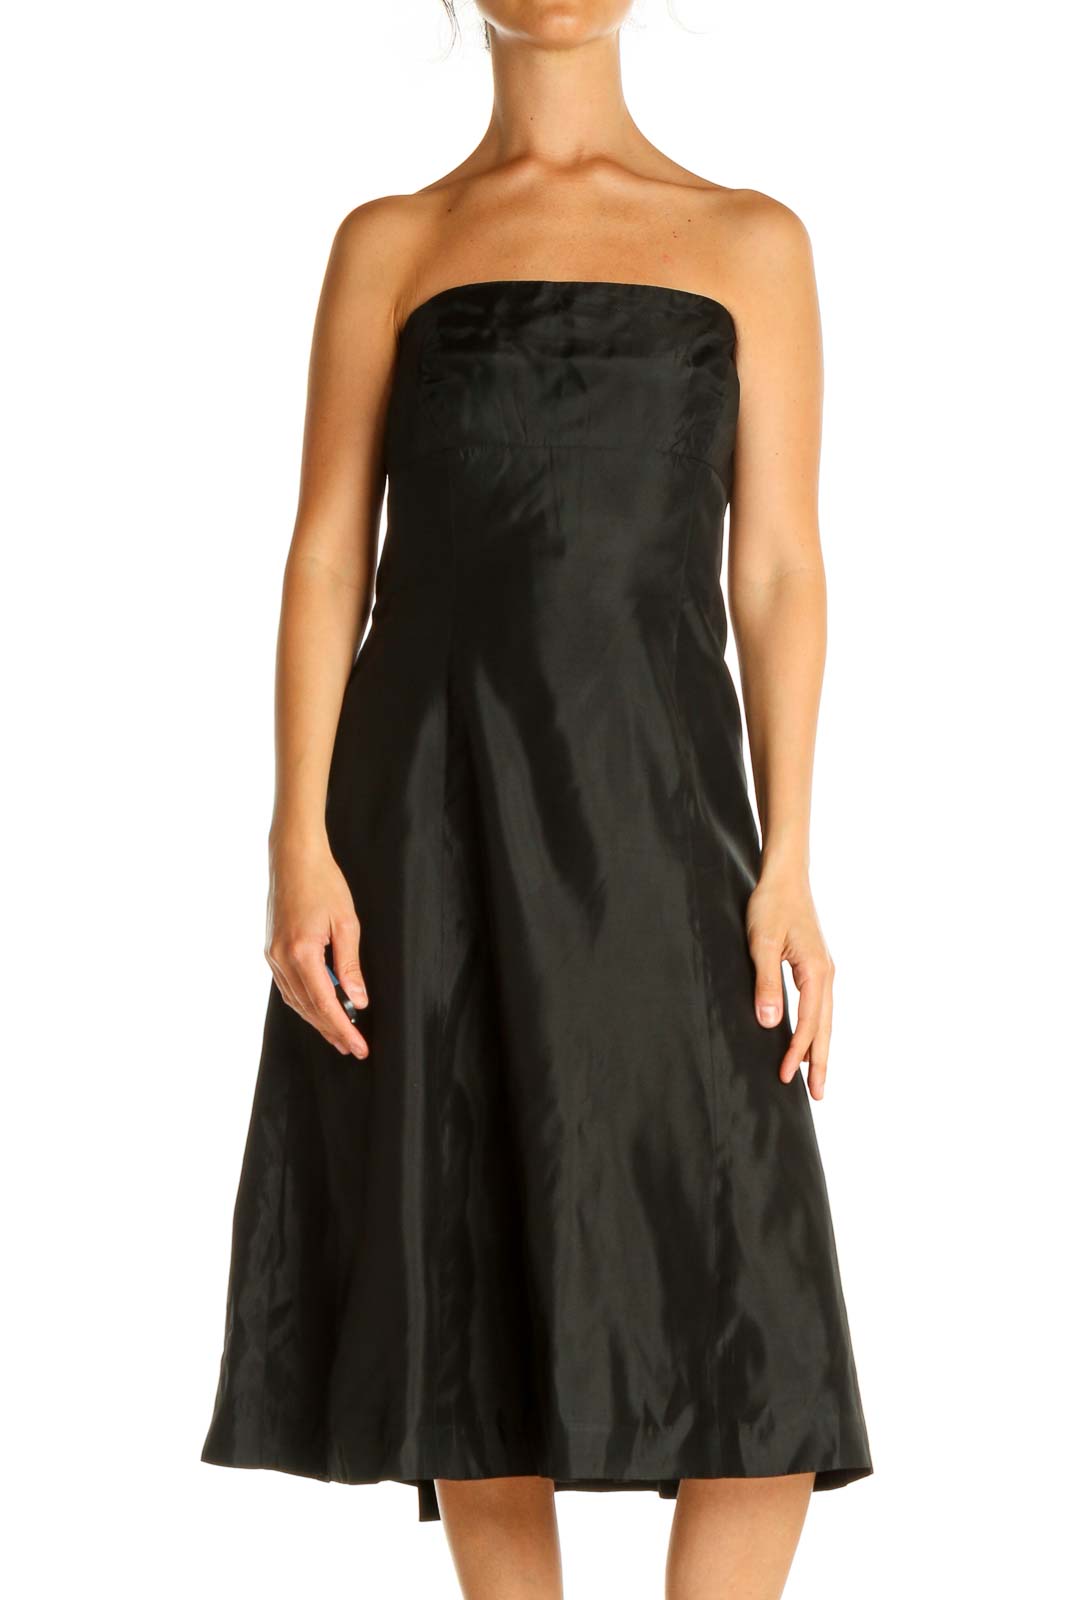 Black Solid Cocktail Fit & Flare Dress Front